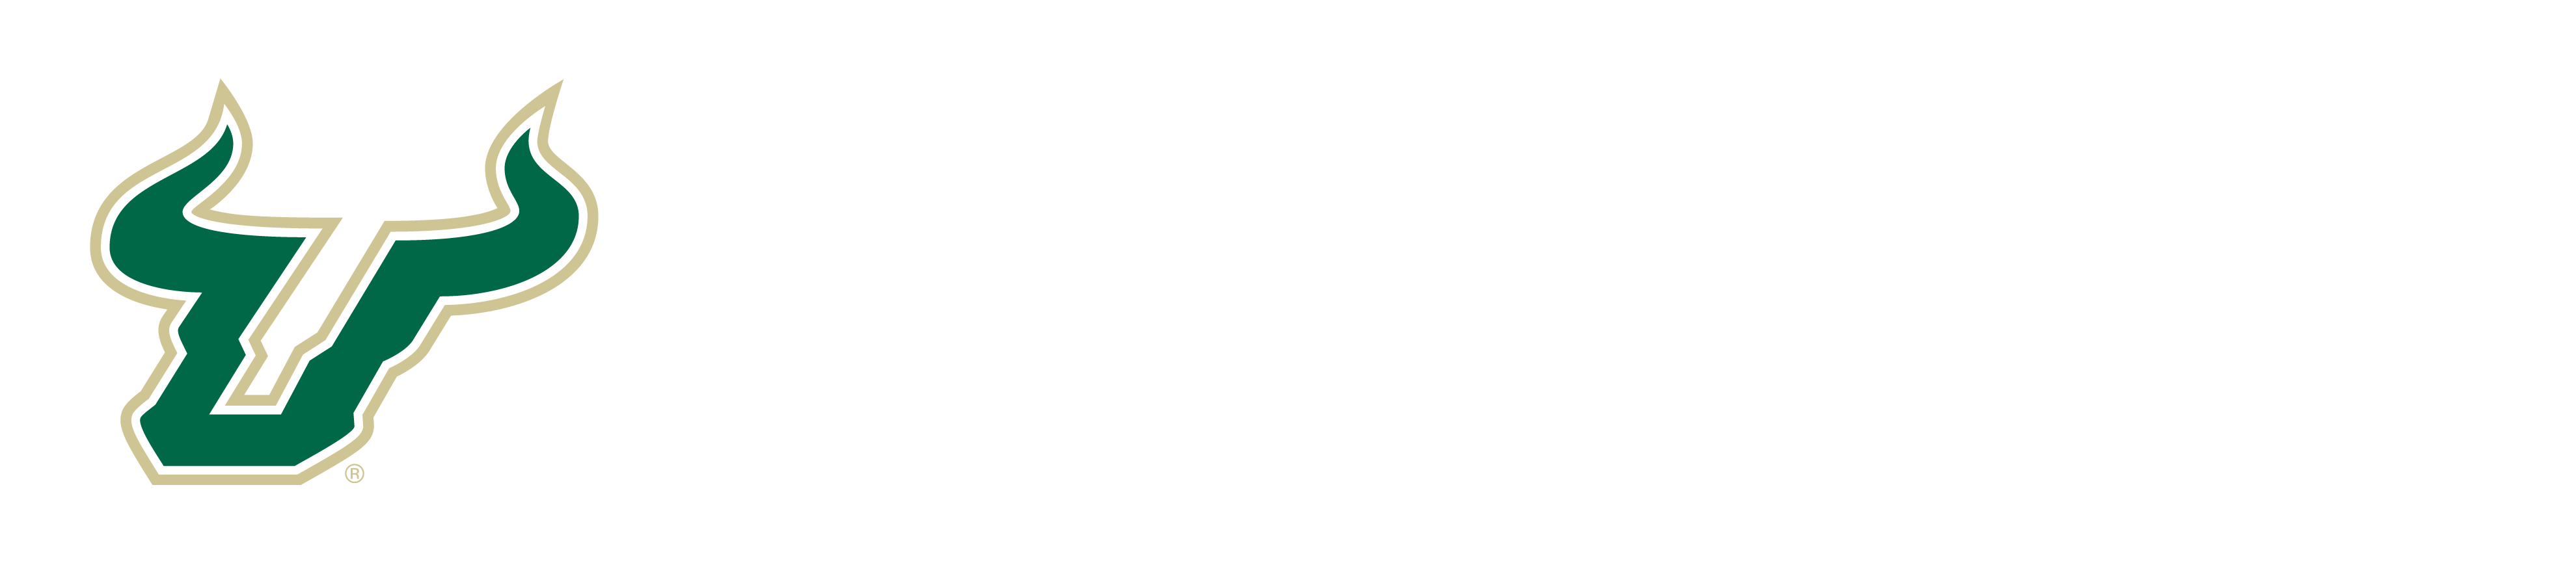 University of South Florida Footer Logo